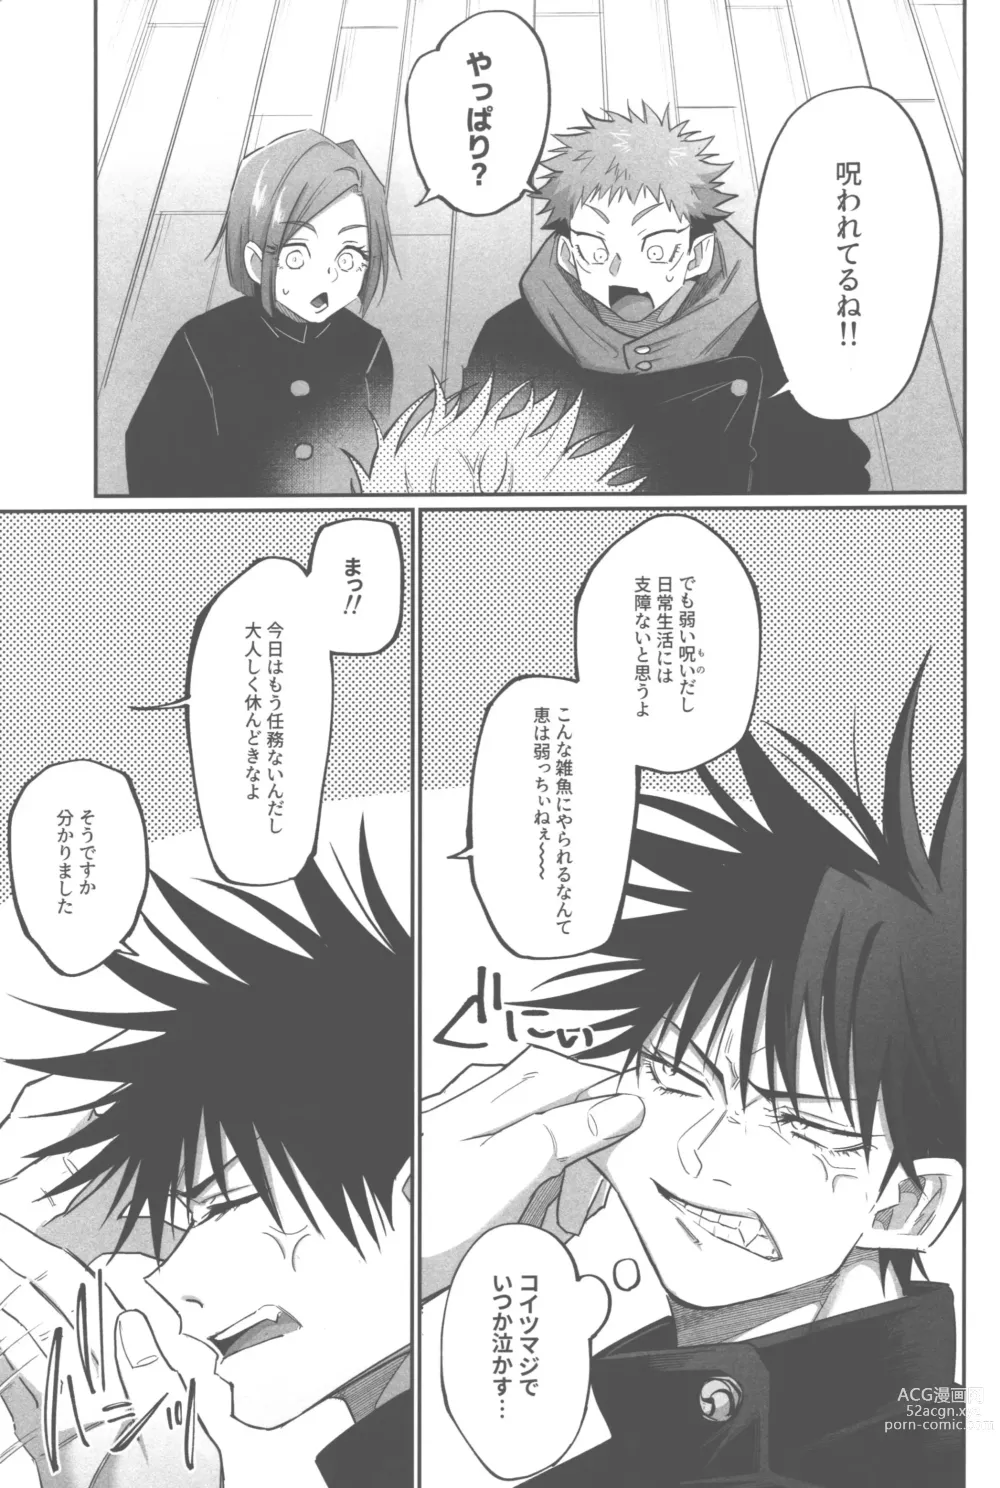 Page 4 of doujinshi Mune no Uchi Seiippai